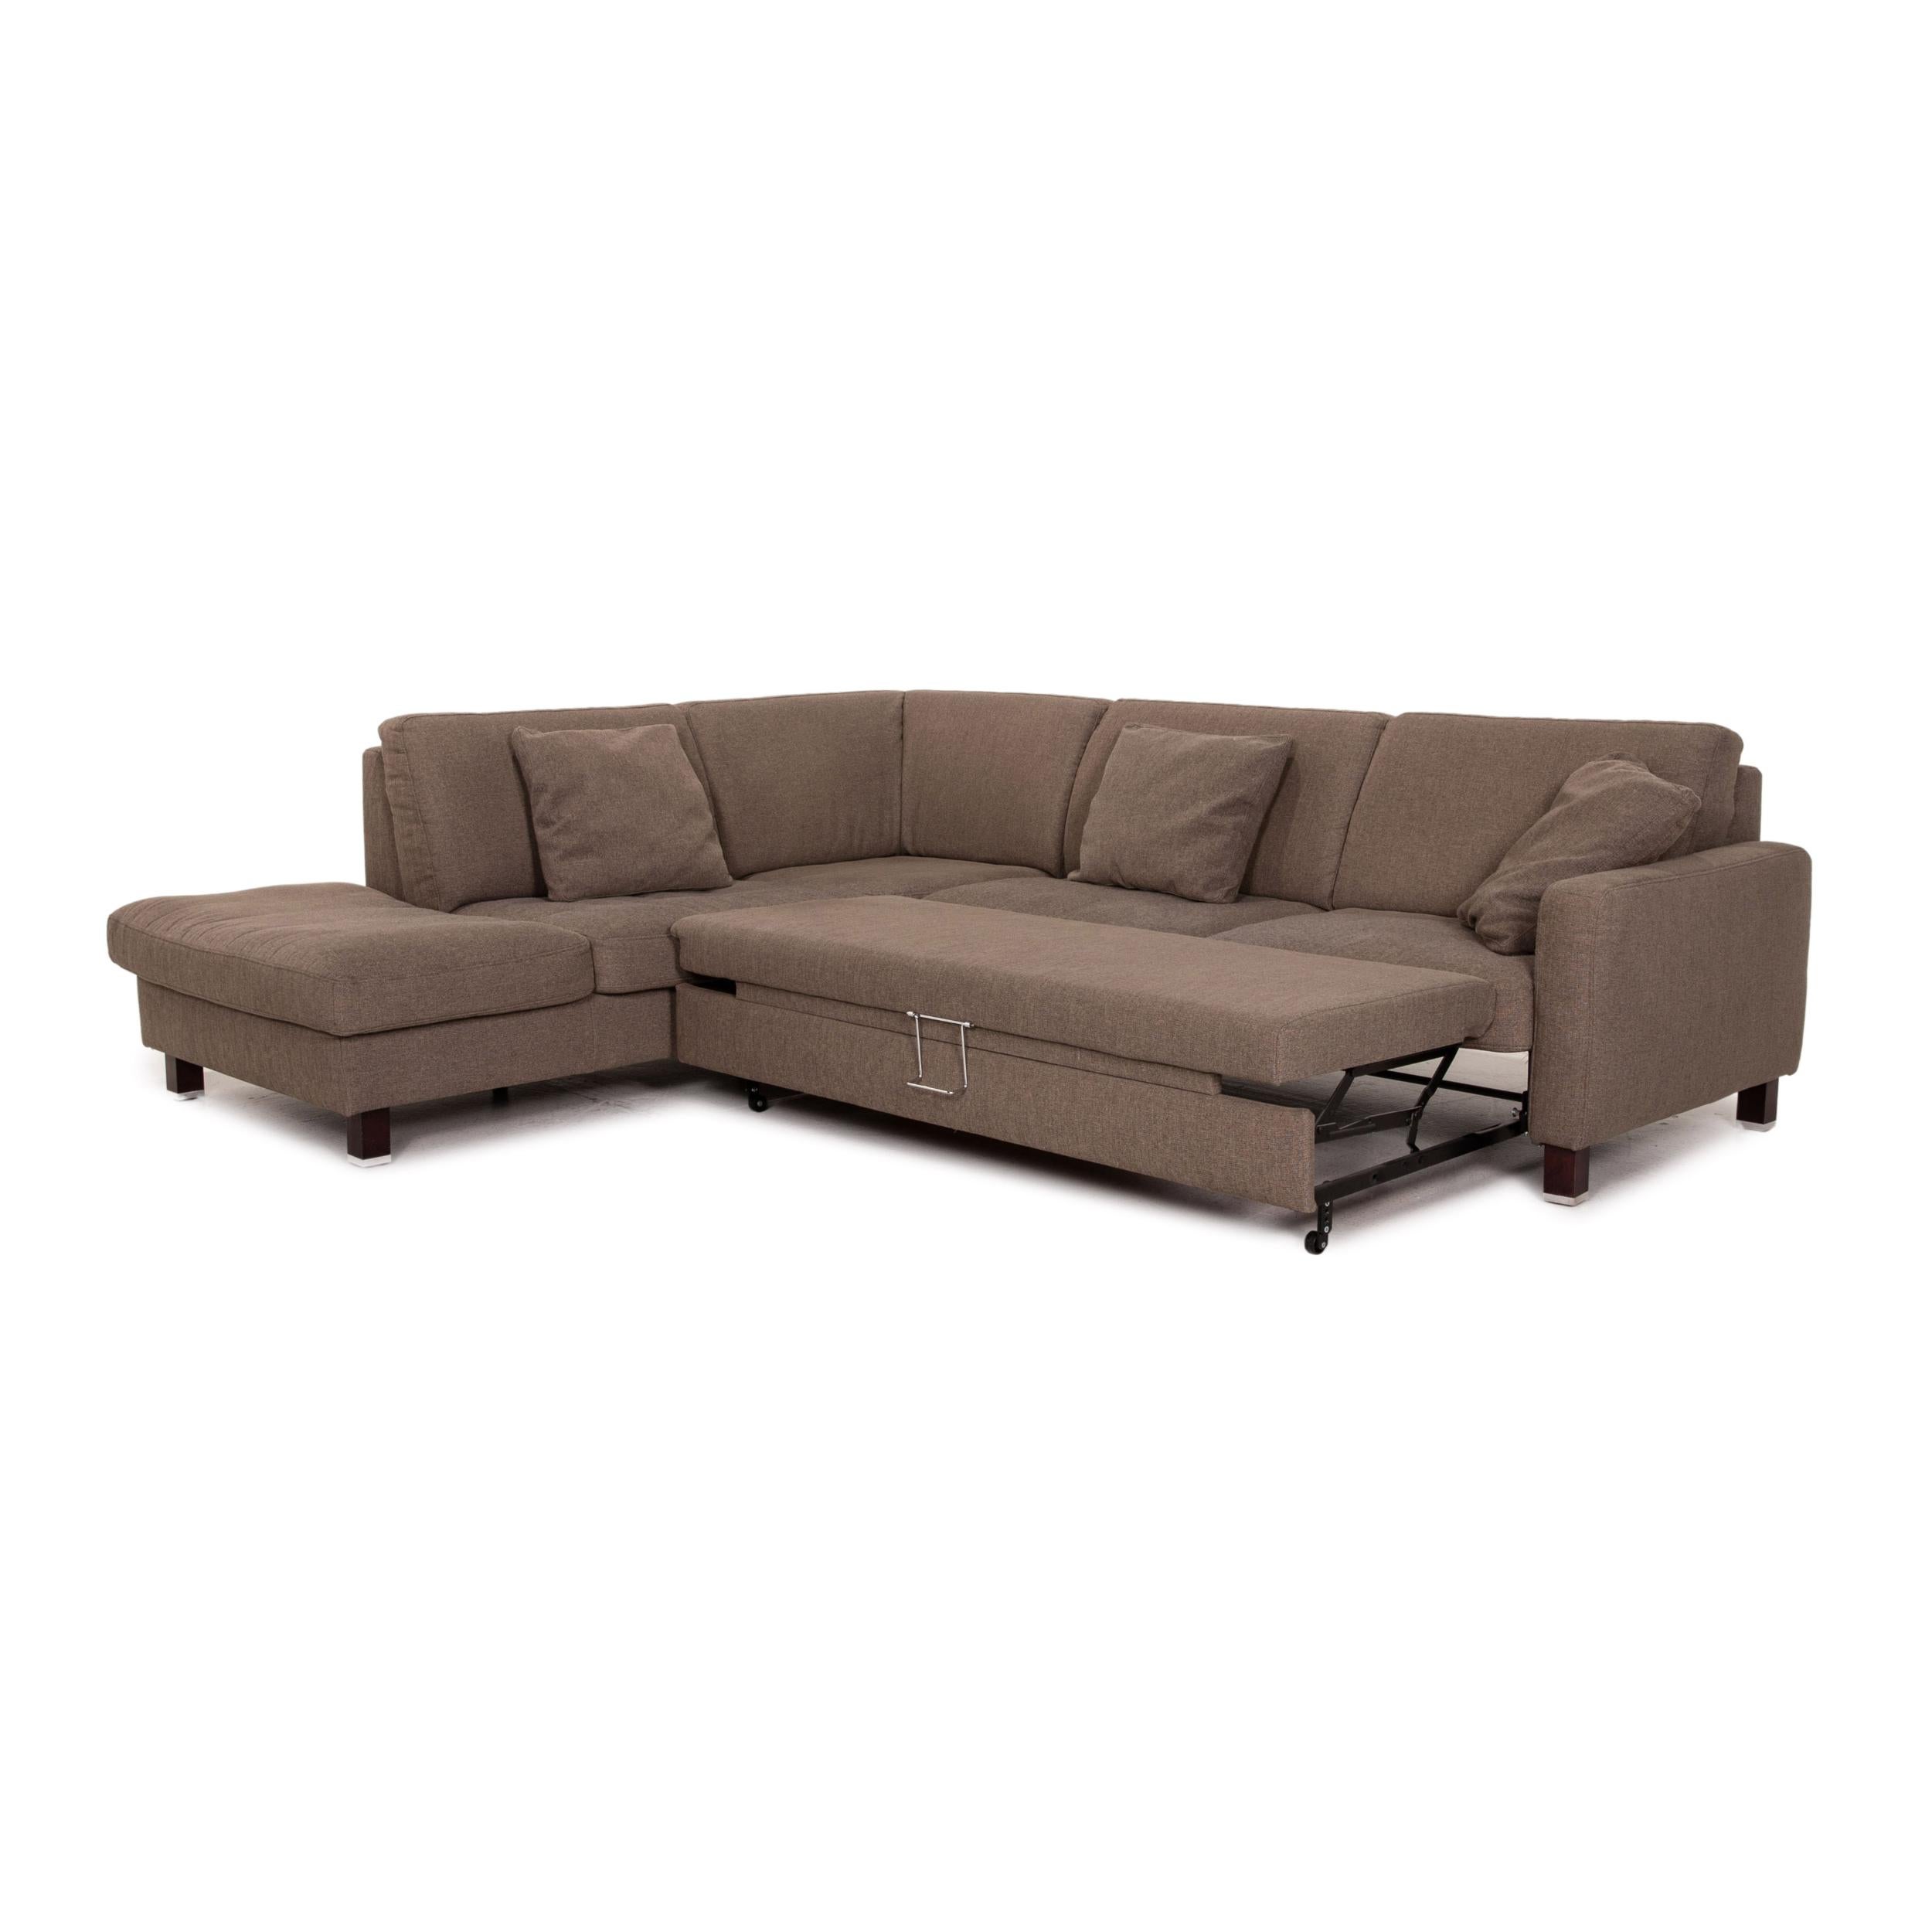 German Ewald Schillig Fabric Sofa Set Gray Brown Function Sleeping Function Sofa Bed